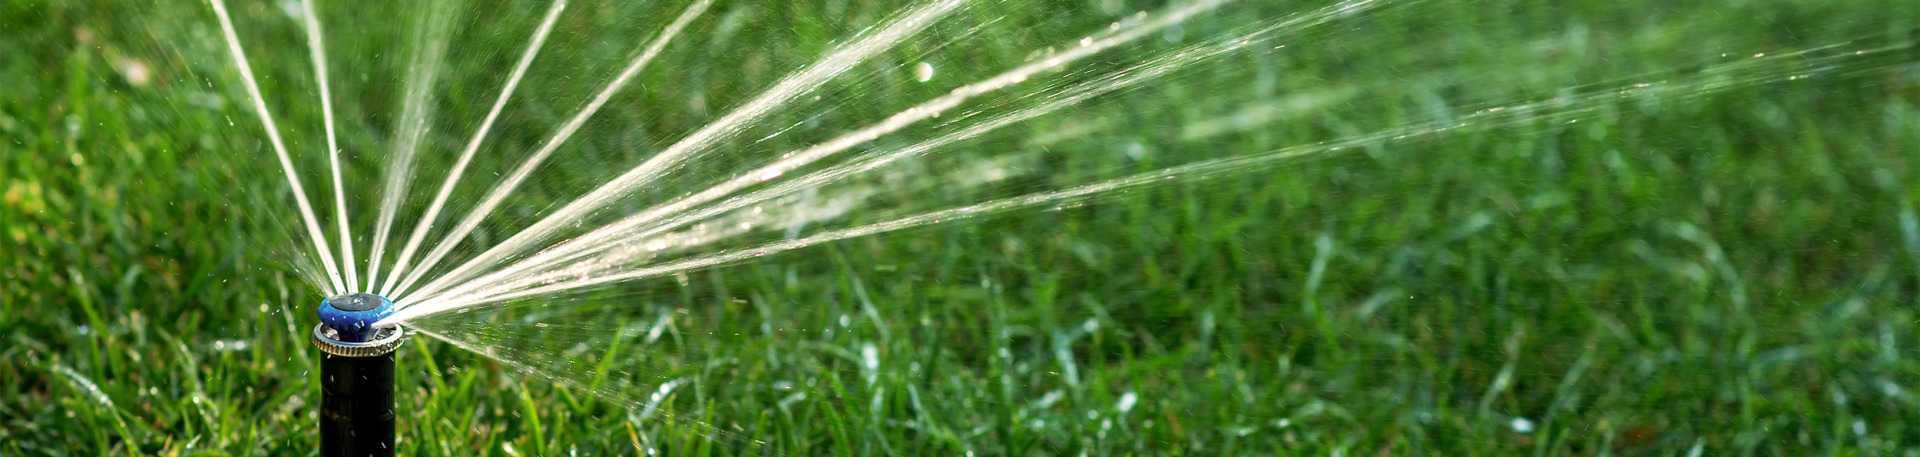 Sprinkler Head Spraying Lawn